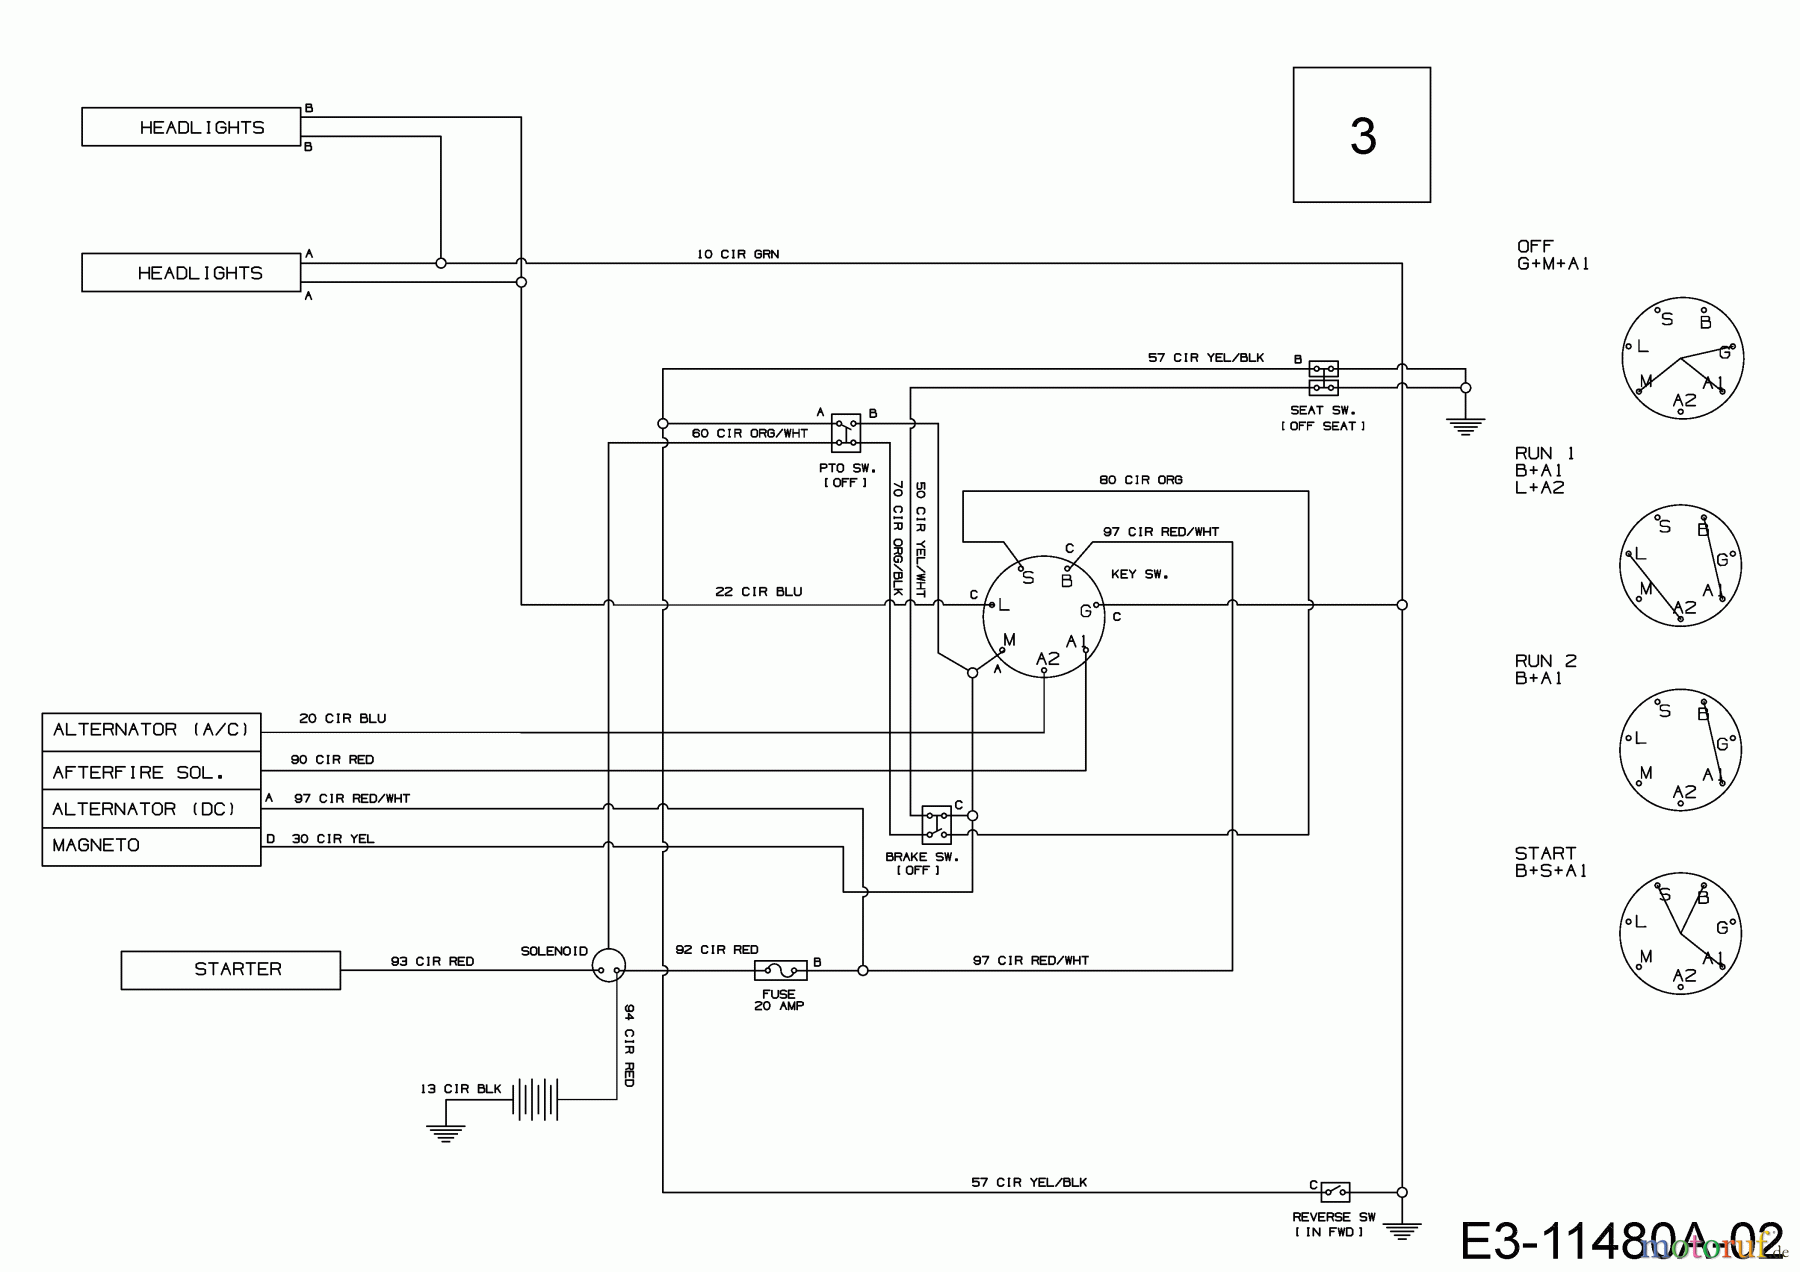  Bestgreen Lawn tractors BG 96 SBK 13C776SF655 (2022) Wiring diagram